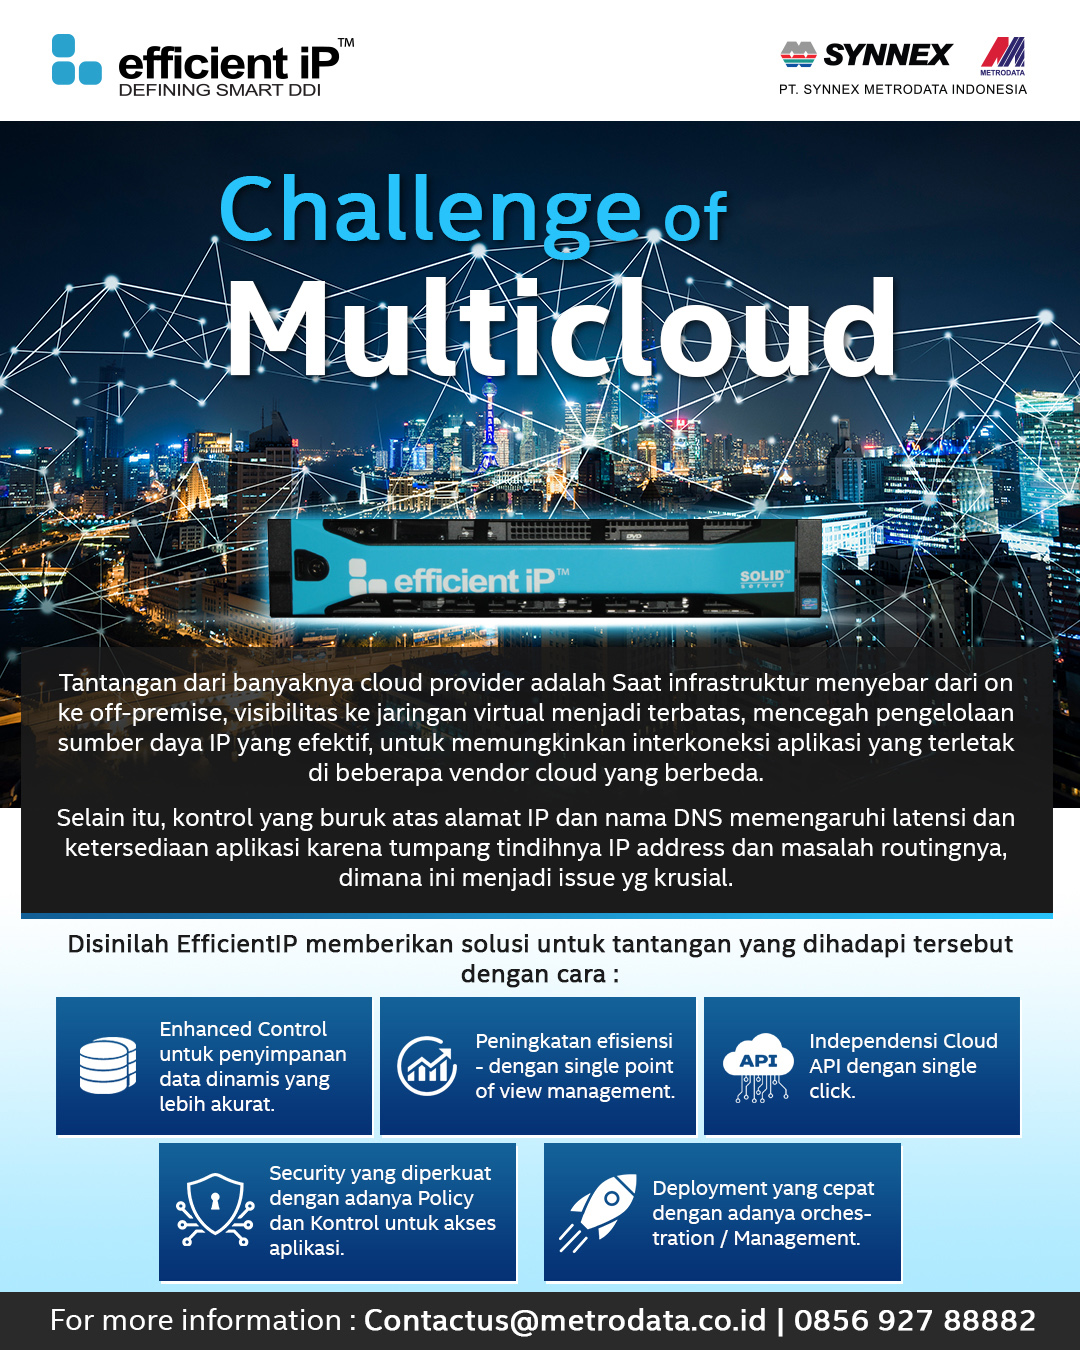 https://www.synnexmetrodata.com/wp-content/uploads/2021/09/EDM-efficient-iP-Challenge-of-Multicloud.jpg